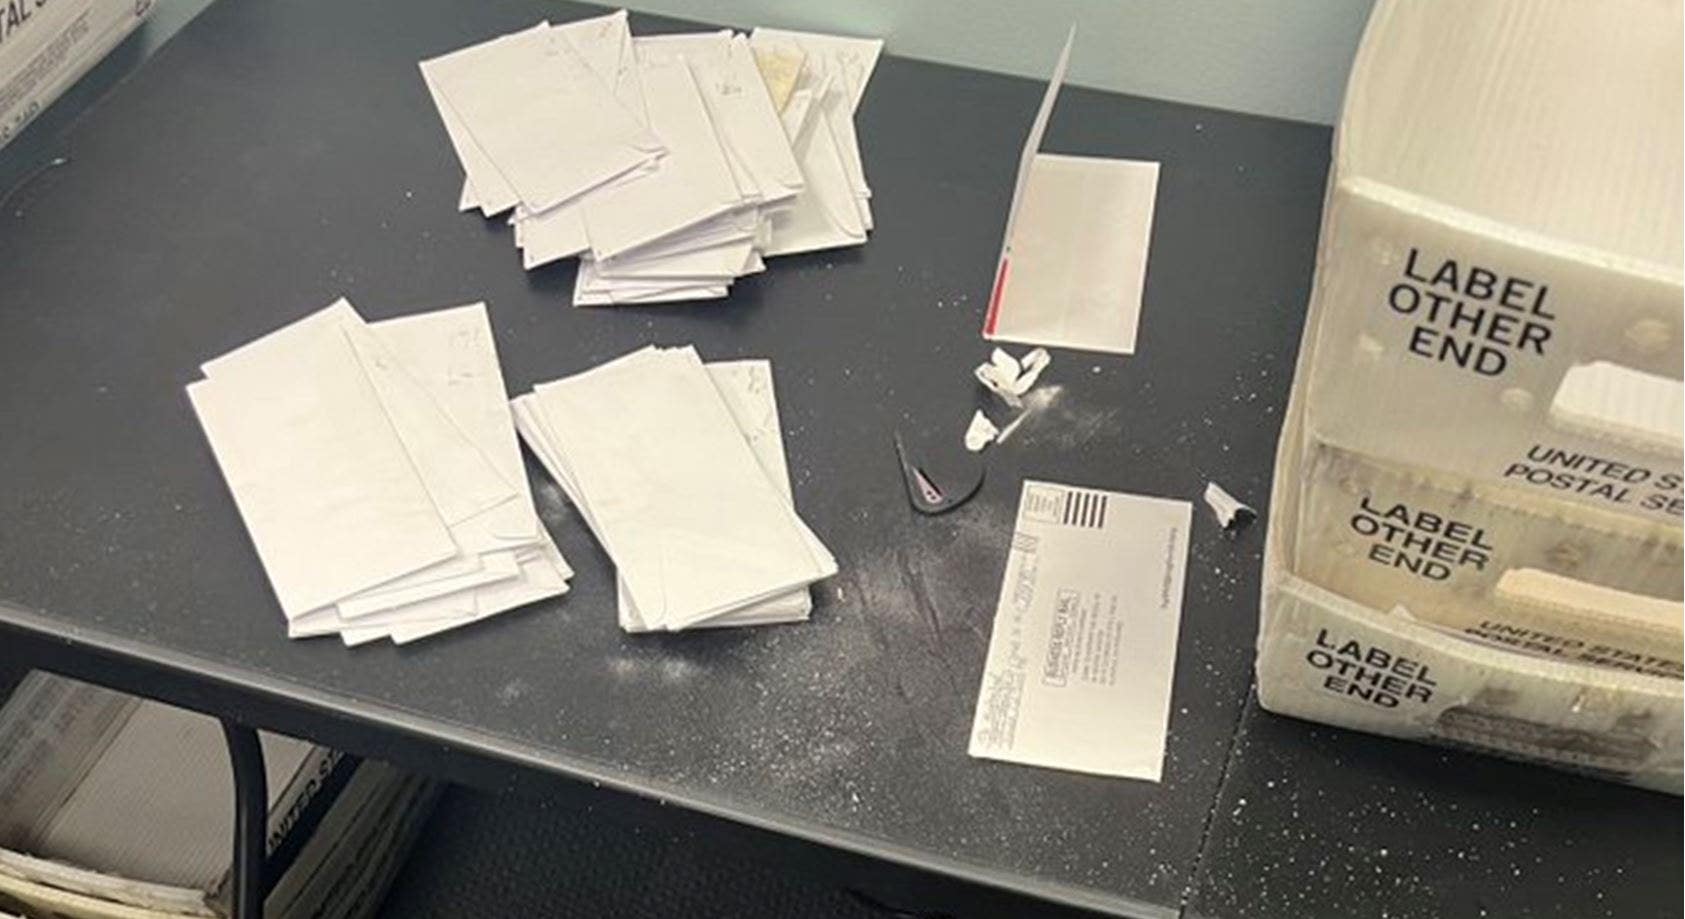 Recall Gascon campaign forced to evacuate LA office over suspicious white powder in envelope